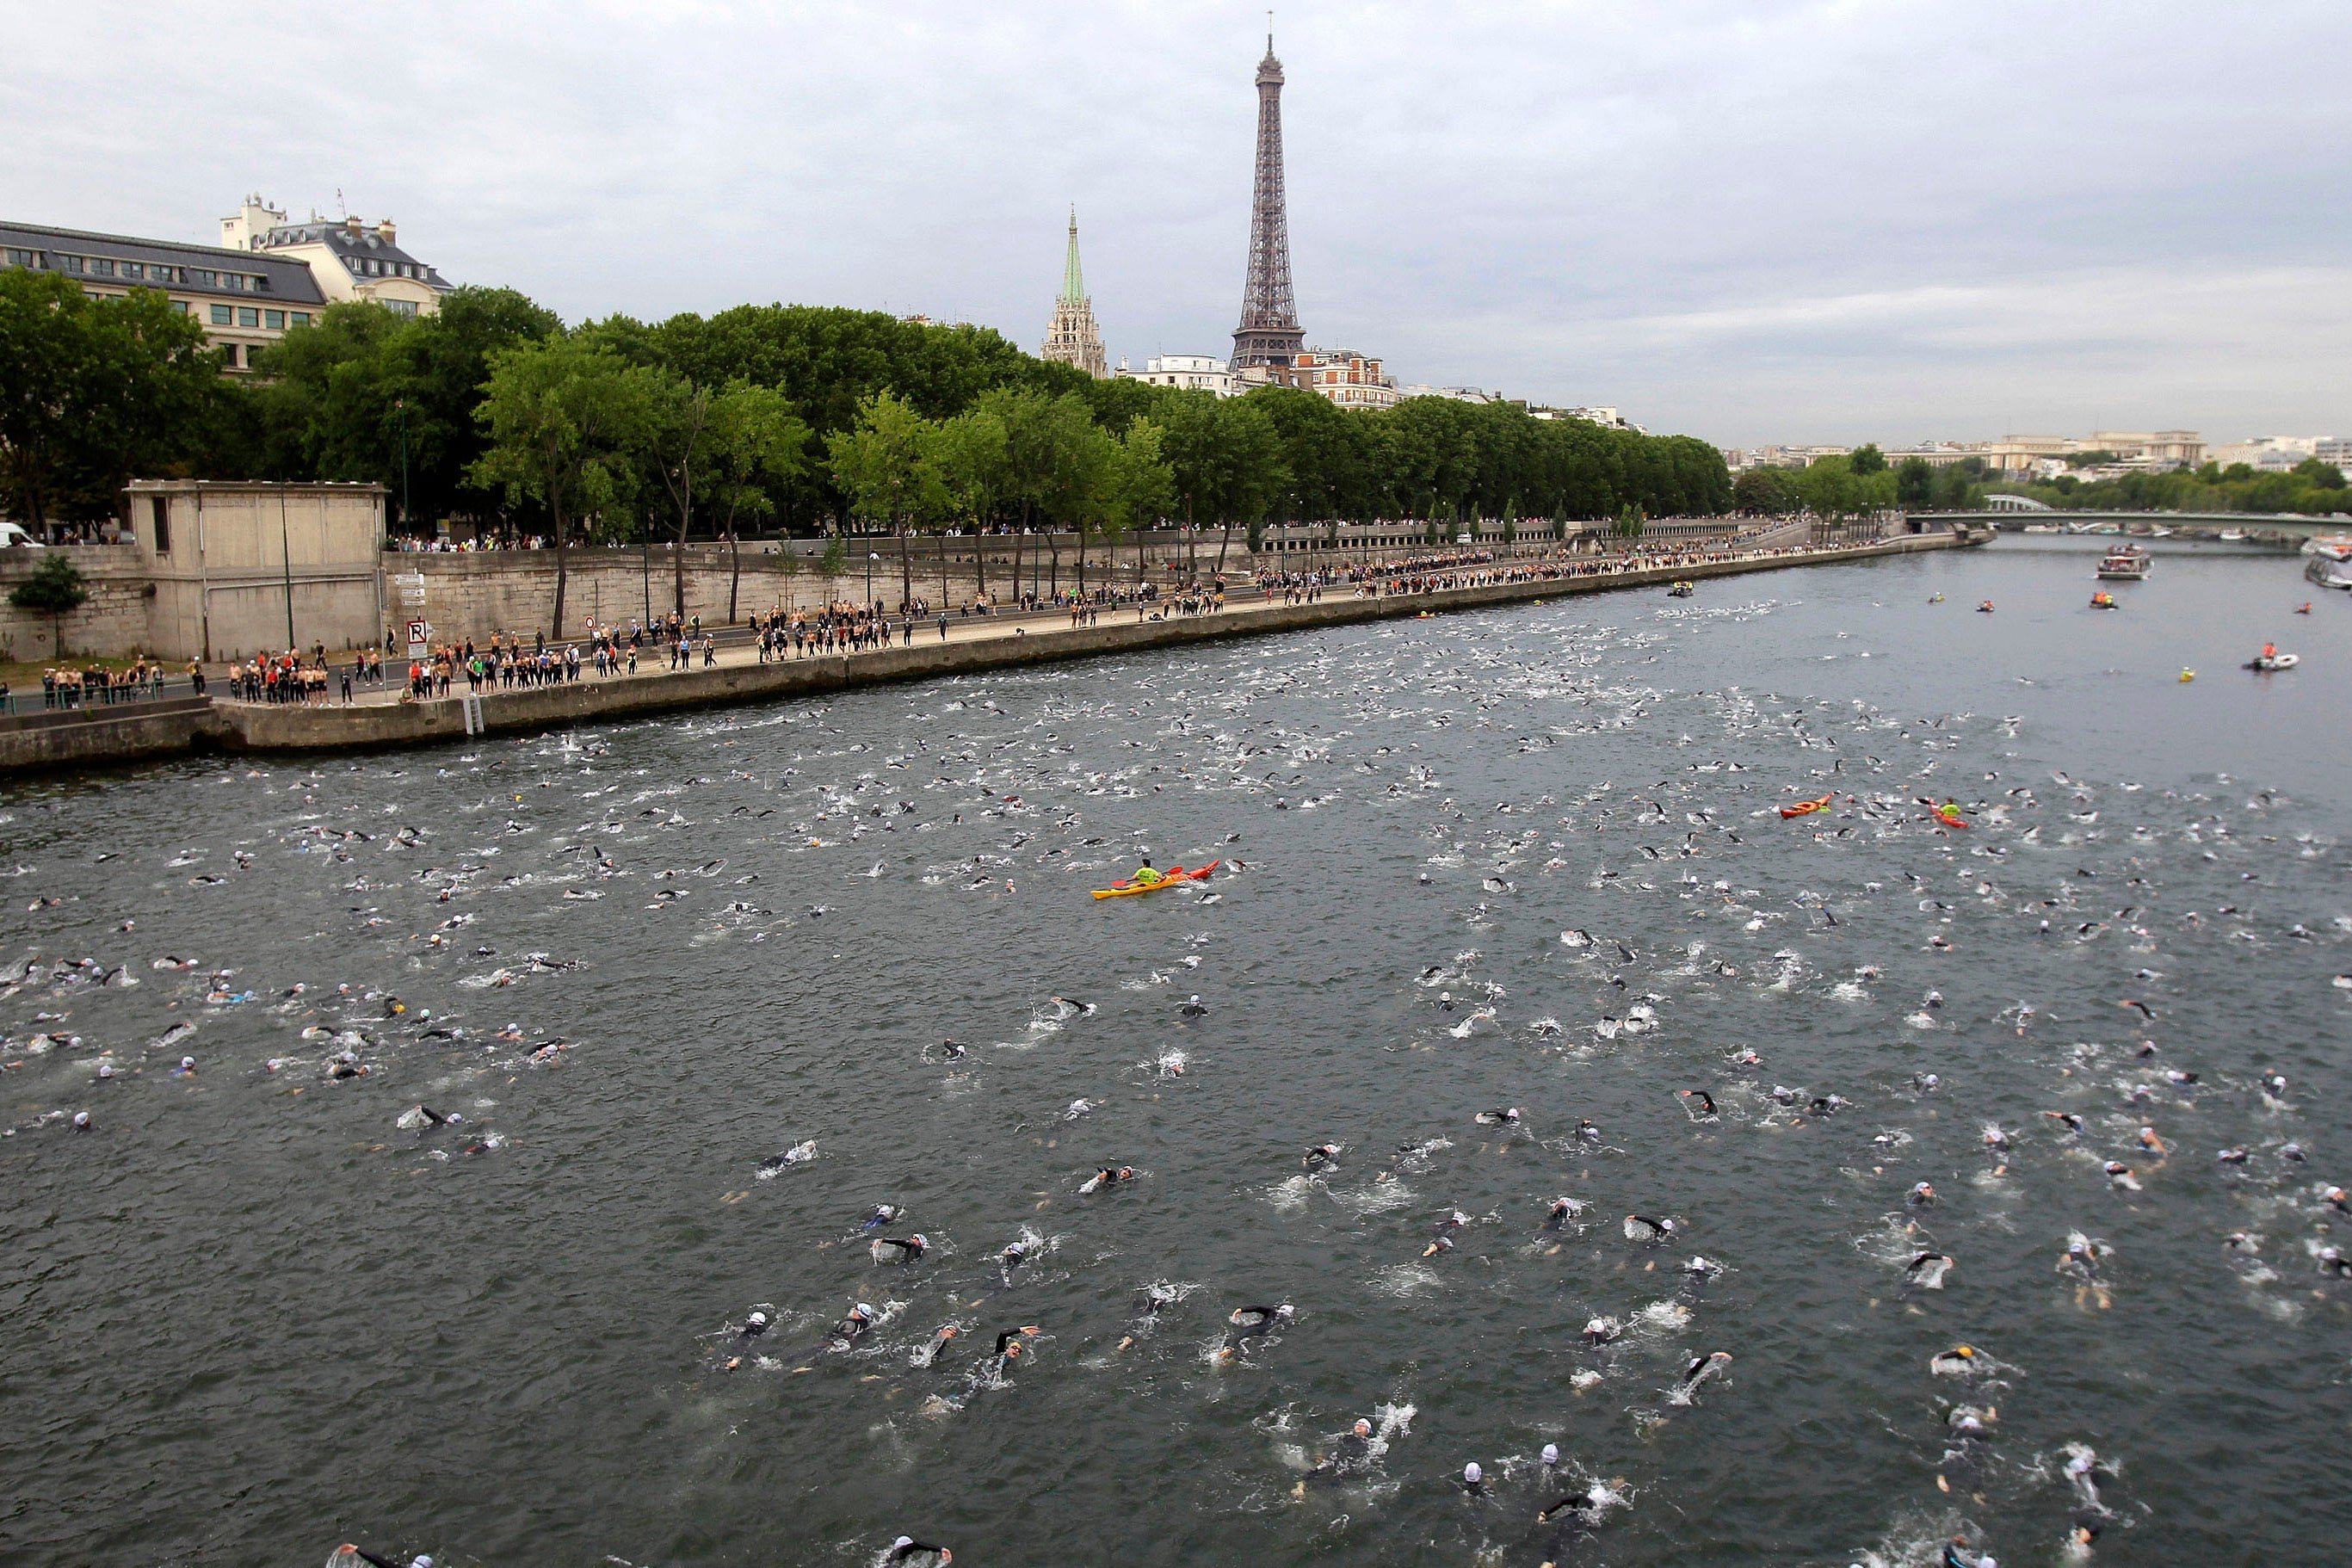 Competitors swim in the Seine River during the Paris Triathlon competition in Paris Sunday, July 10, 2011